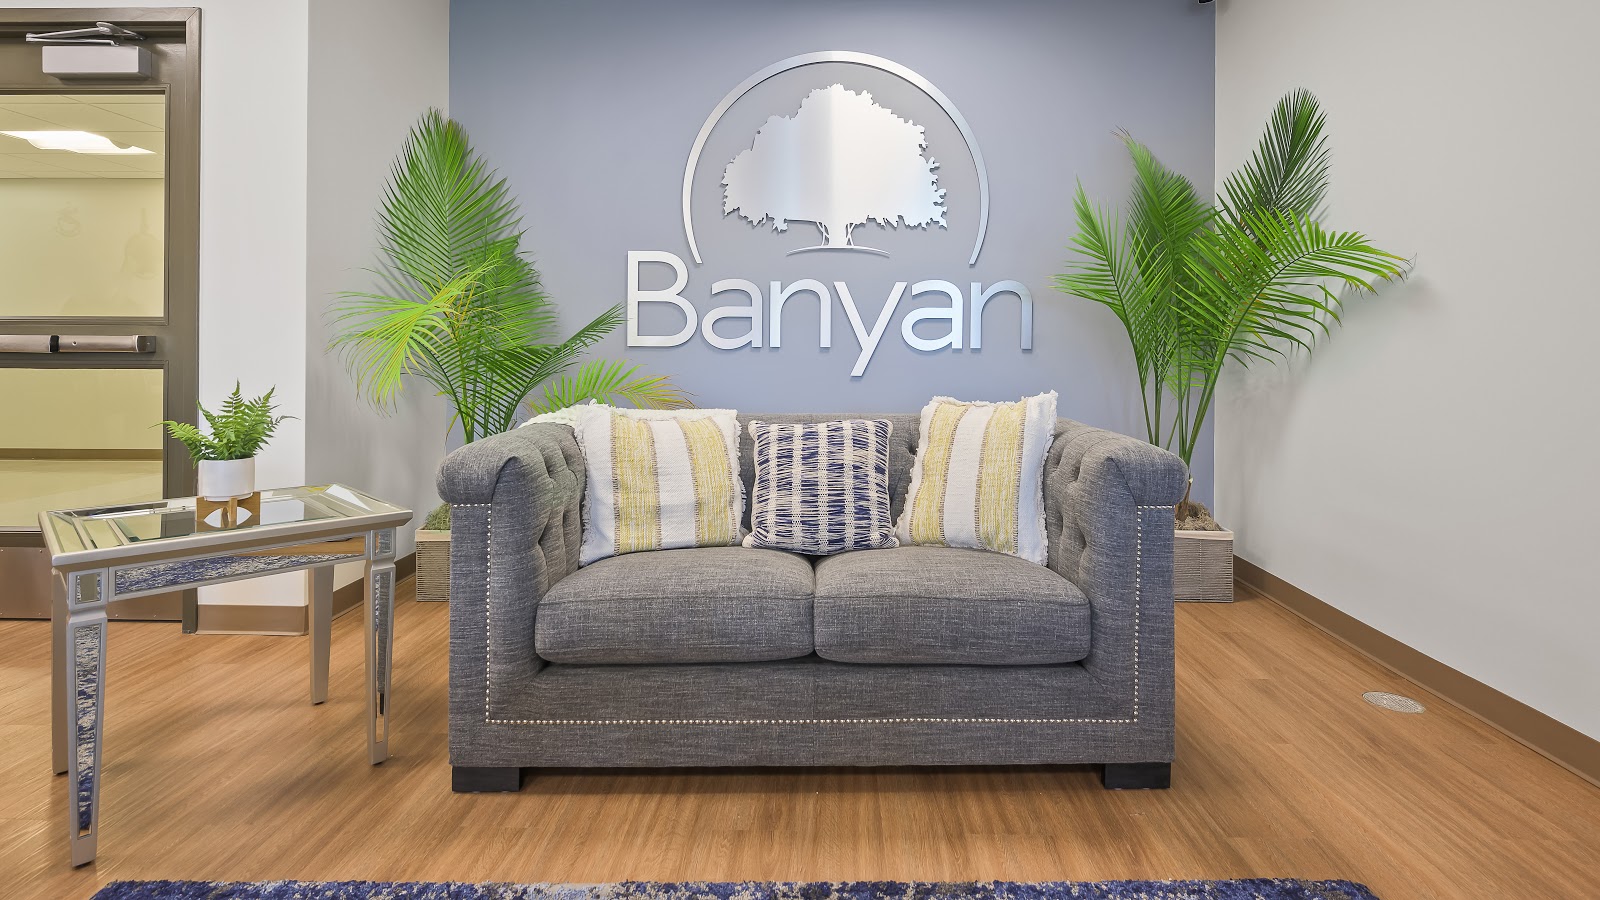 Banyan Treatment Centers - Delaware